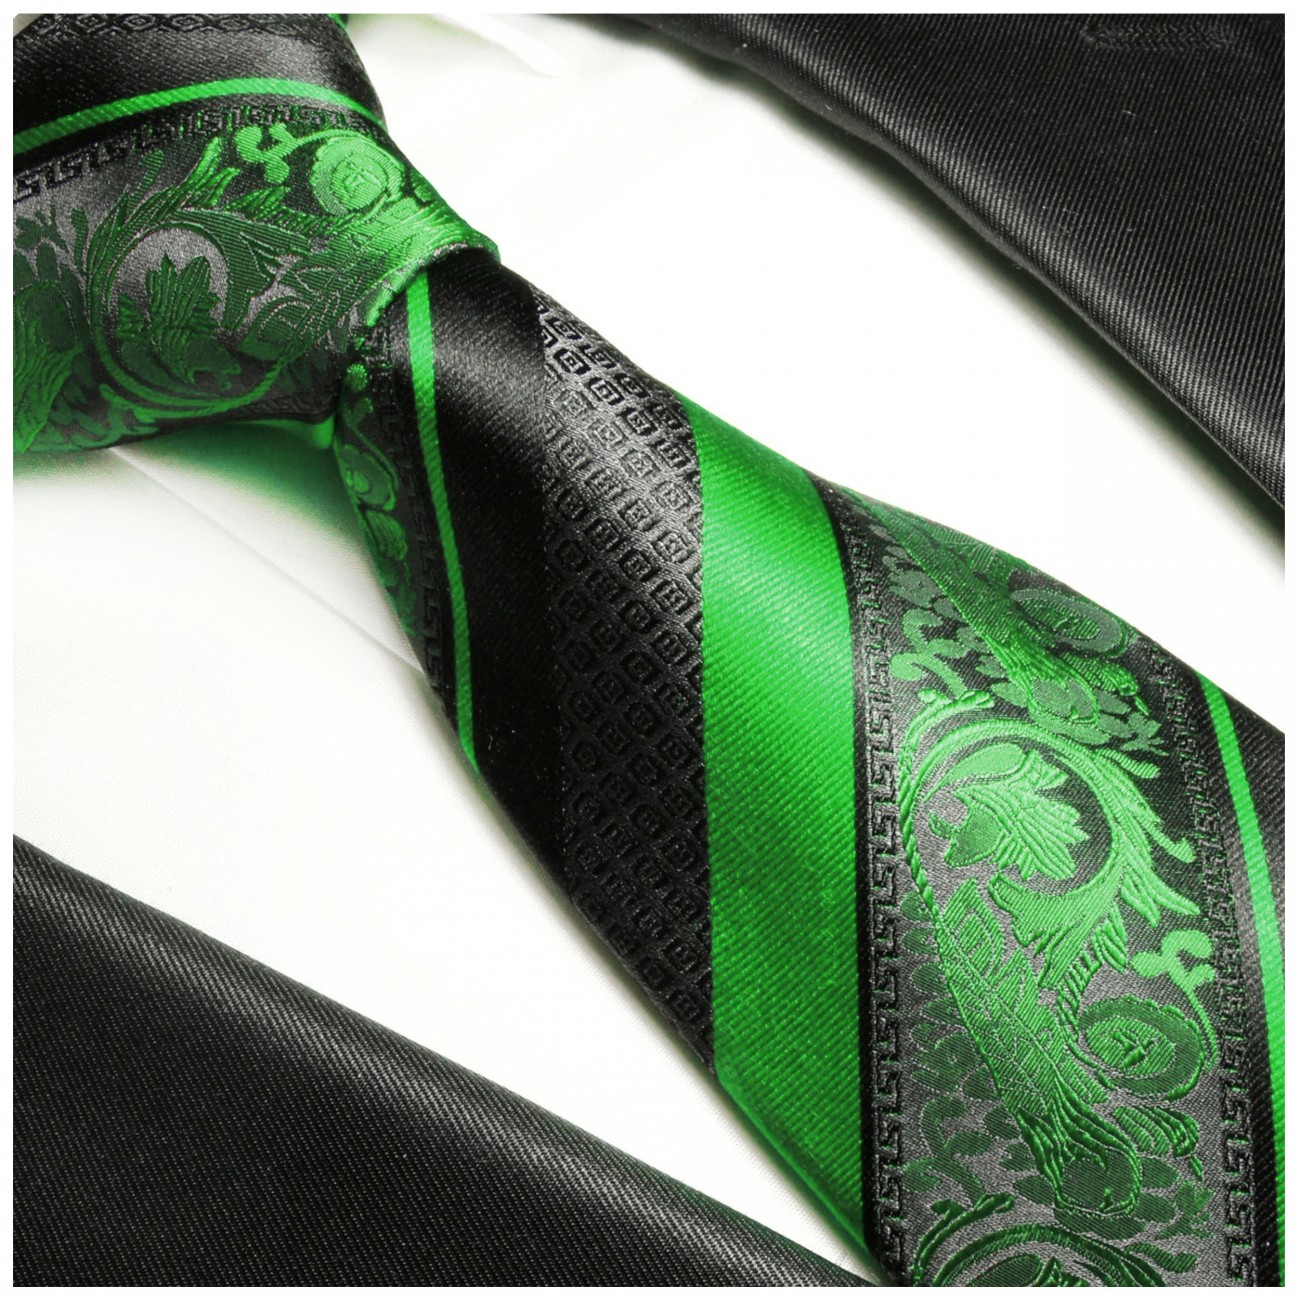 Paul Malone Krawatte mintgrün uni einfarbig satin grüne Seidenkrawatte 488